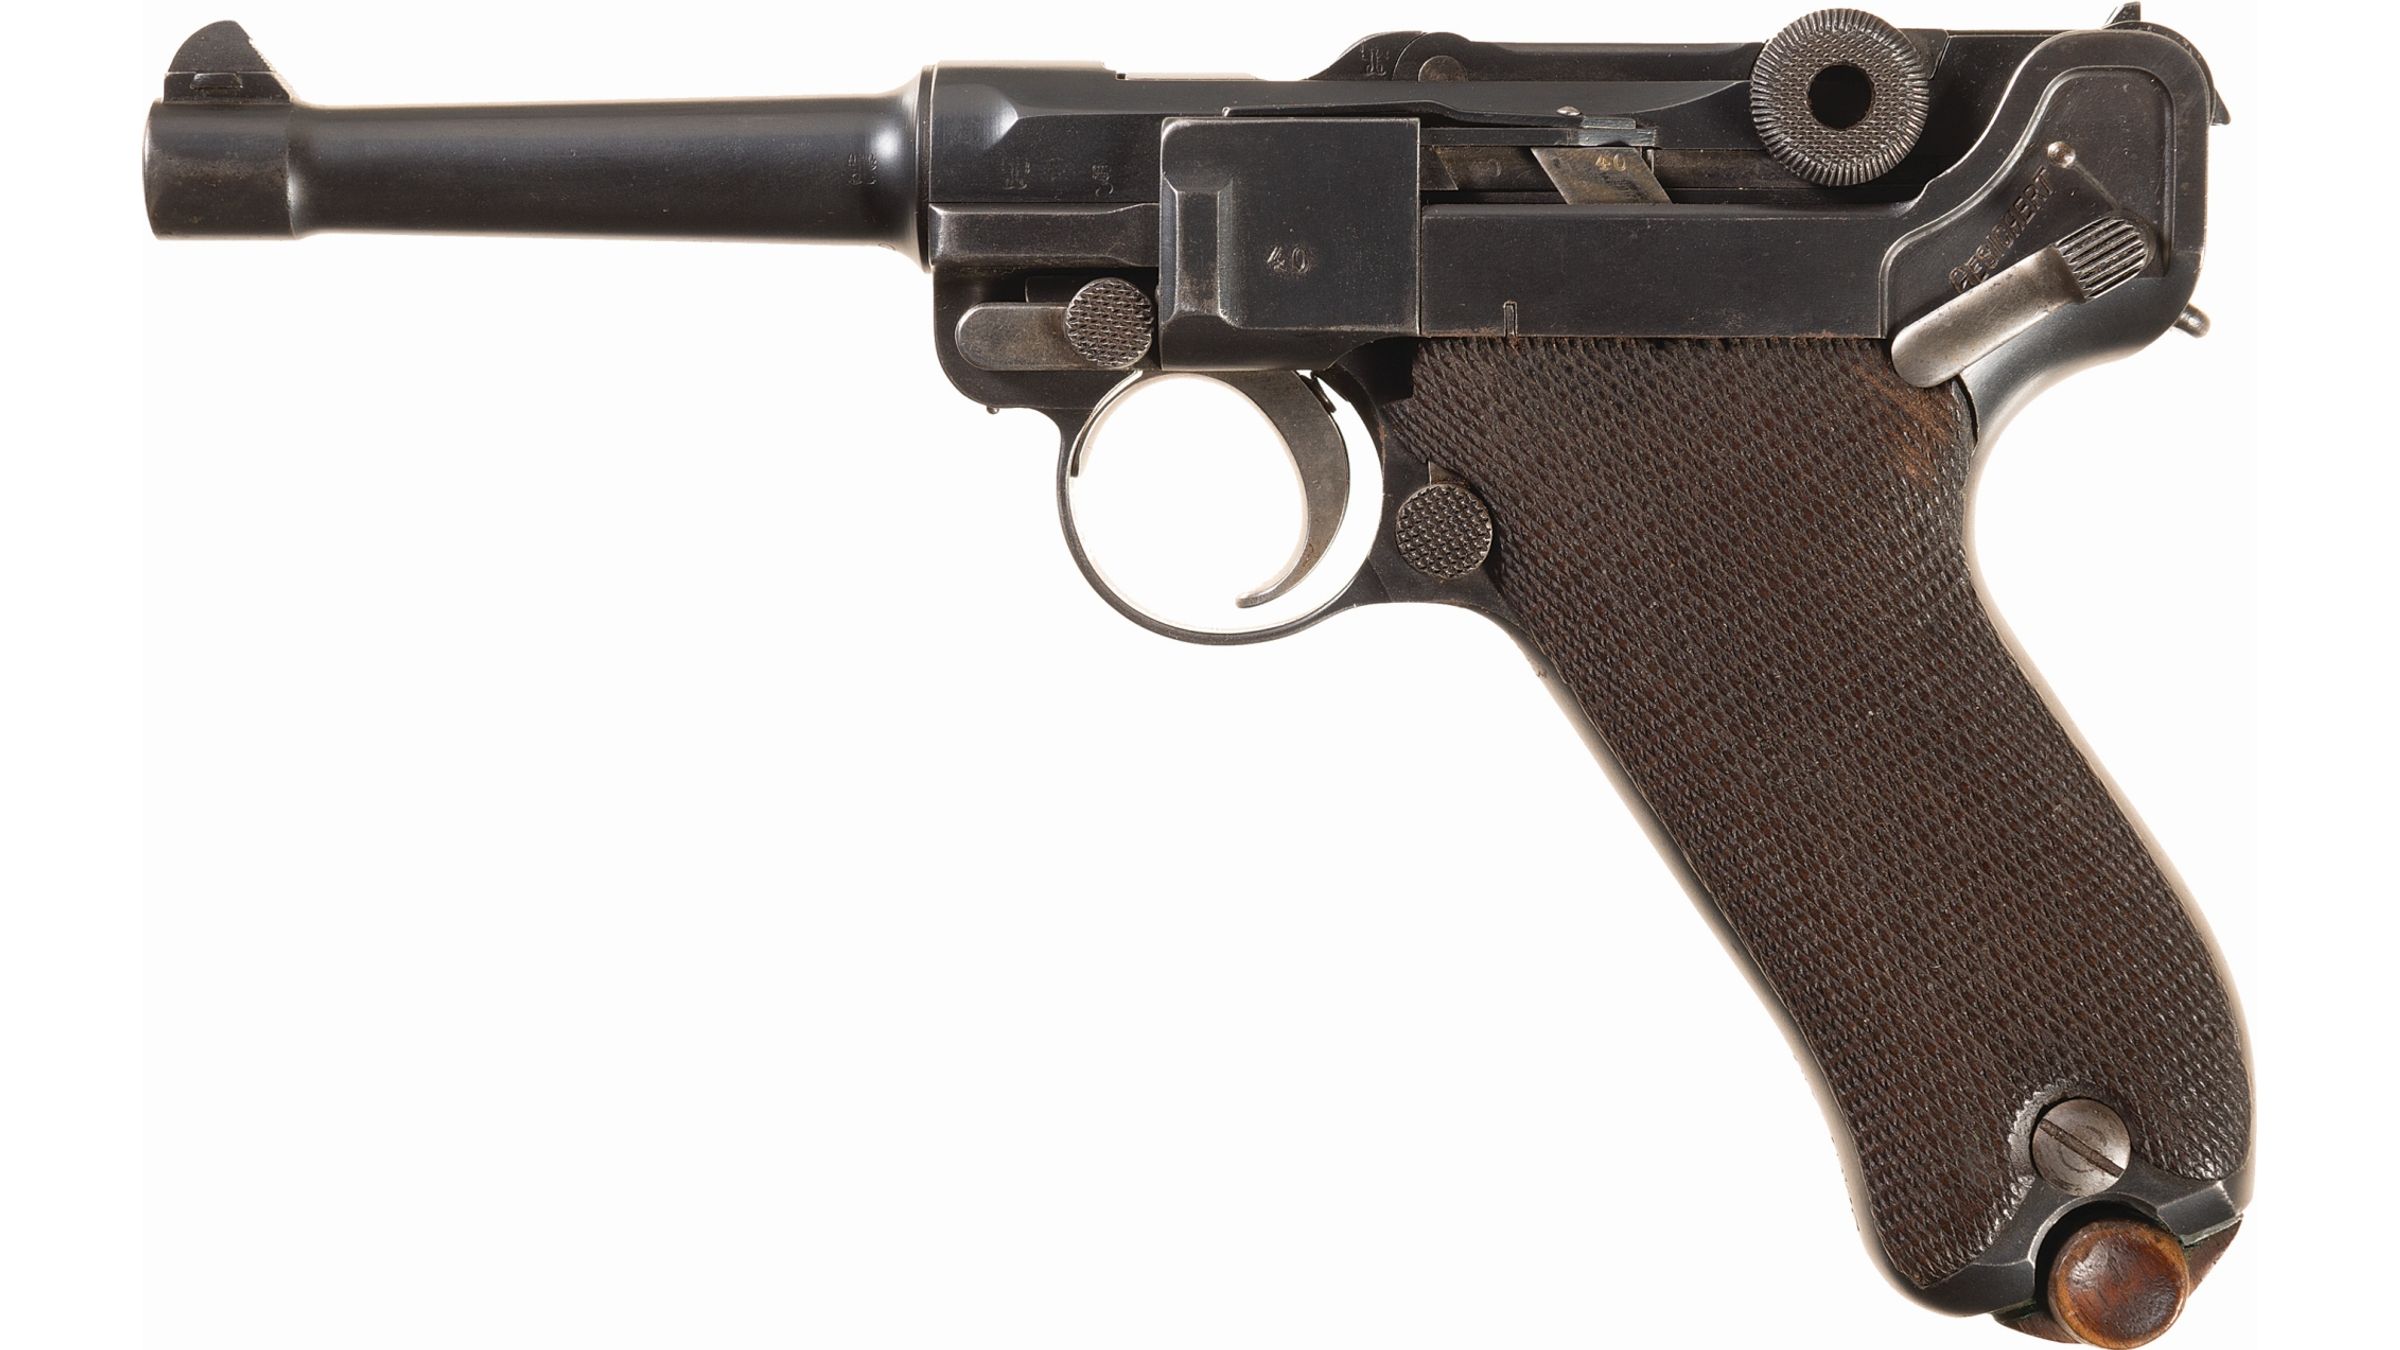 dwm-p-08-police-reword-luger-semi-automatic-pistol-rock-island-auction